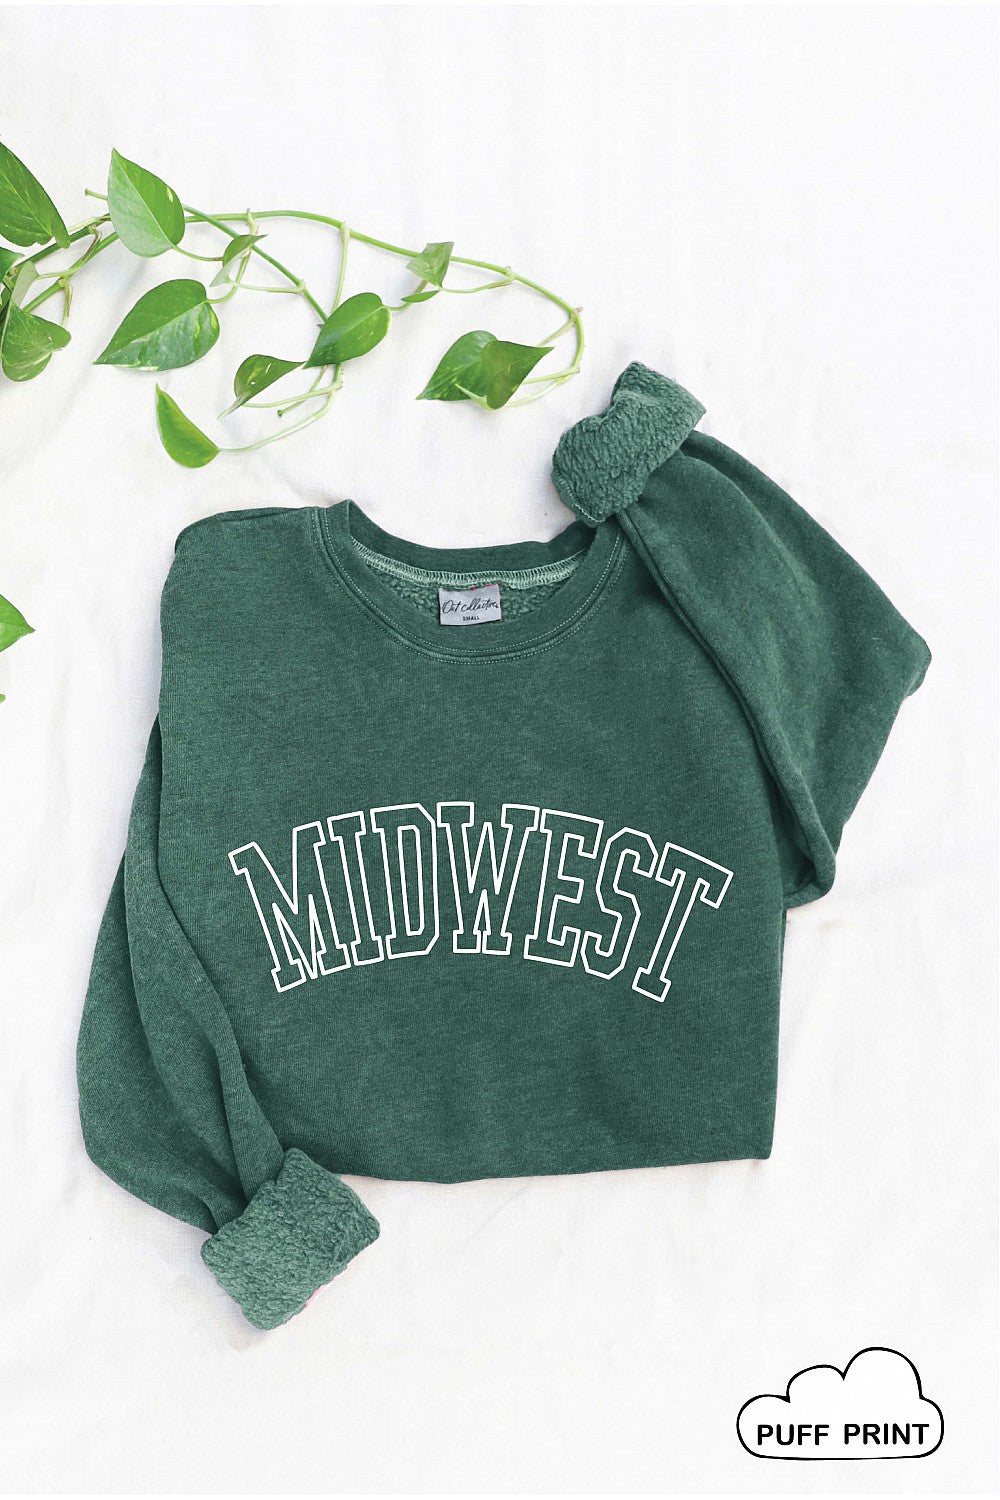 Midwest Puff Print Sweatshirt